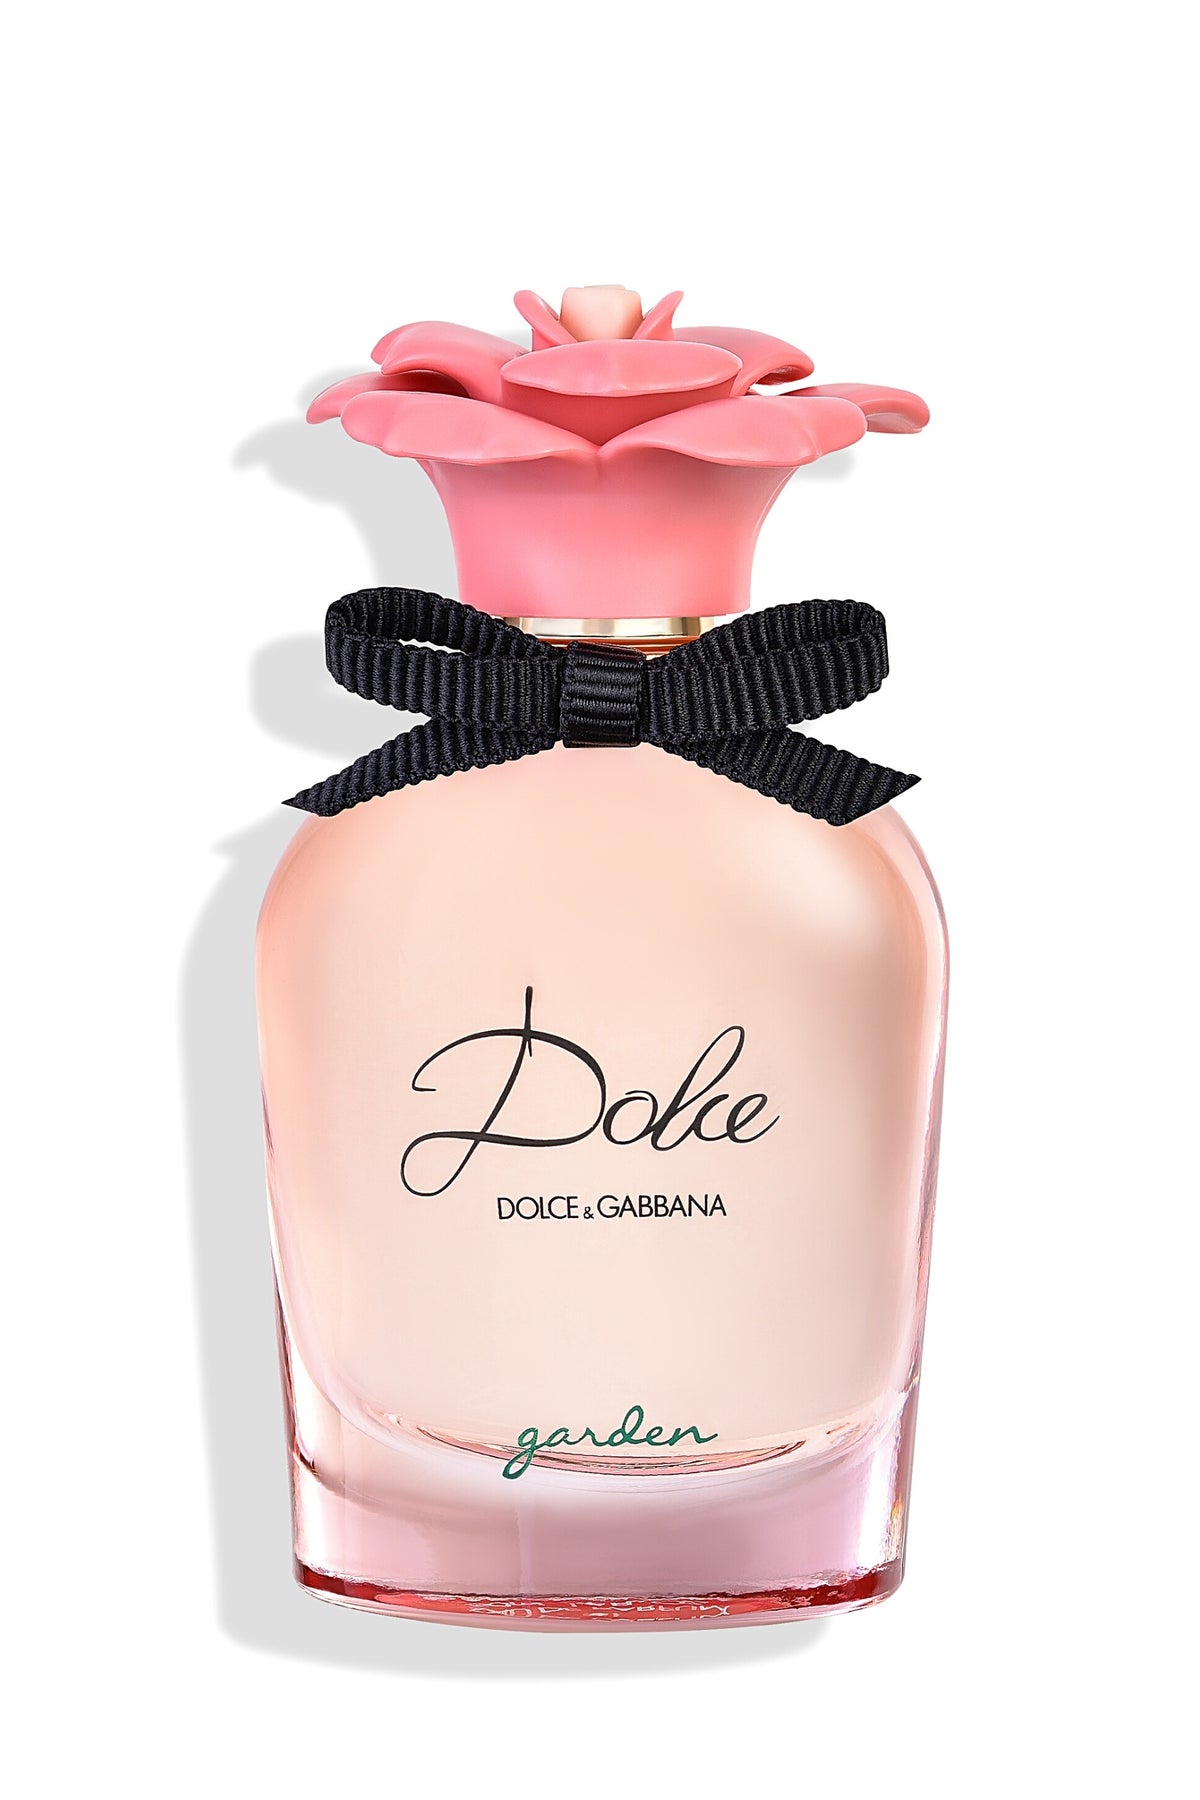 Dolce & Gabbana | Garden Eau de Parfum - REBL